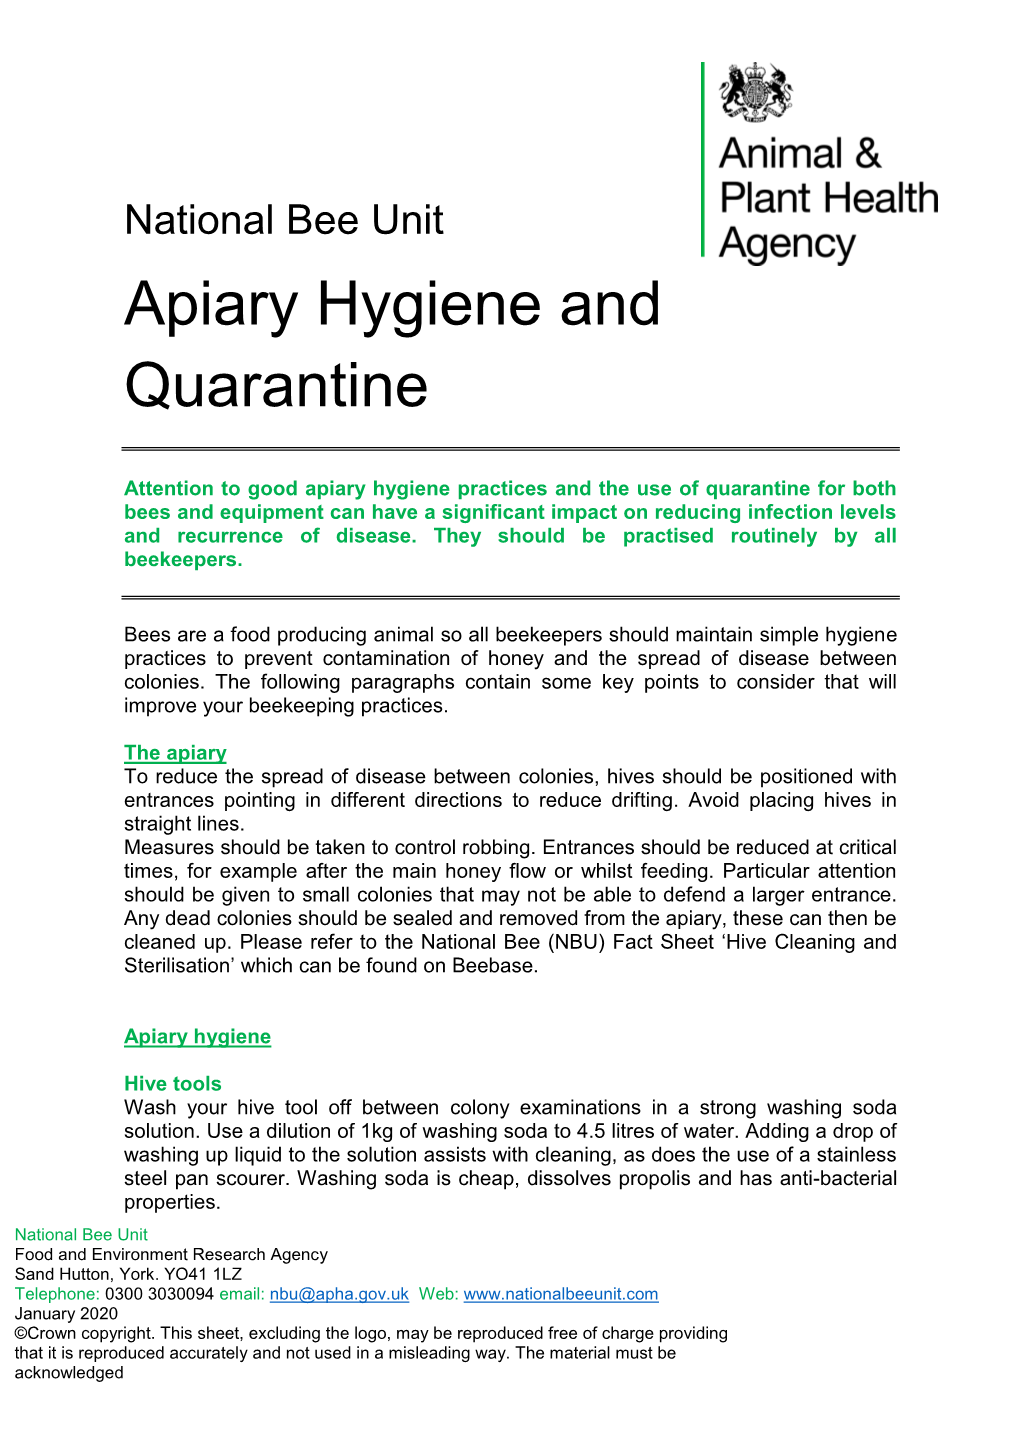 National Bee Unit Apiary Hygiene and Quarantine